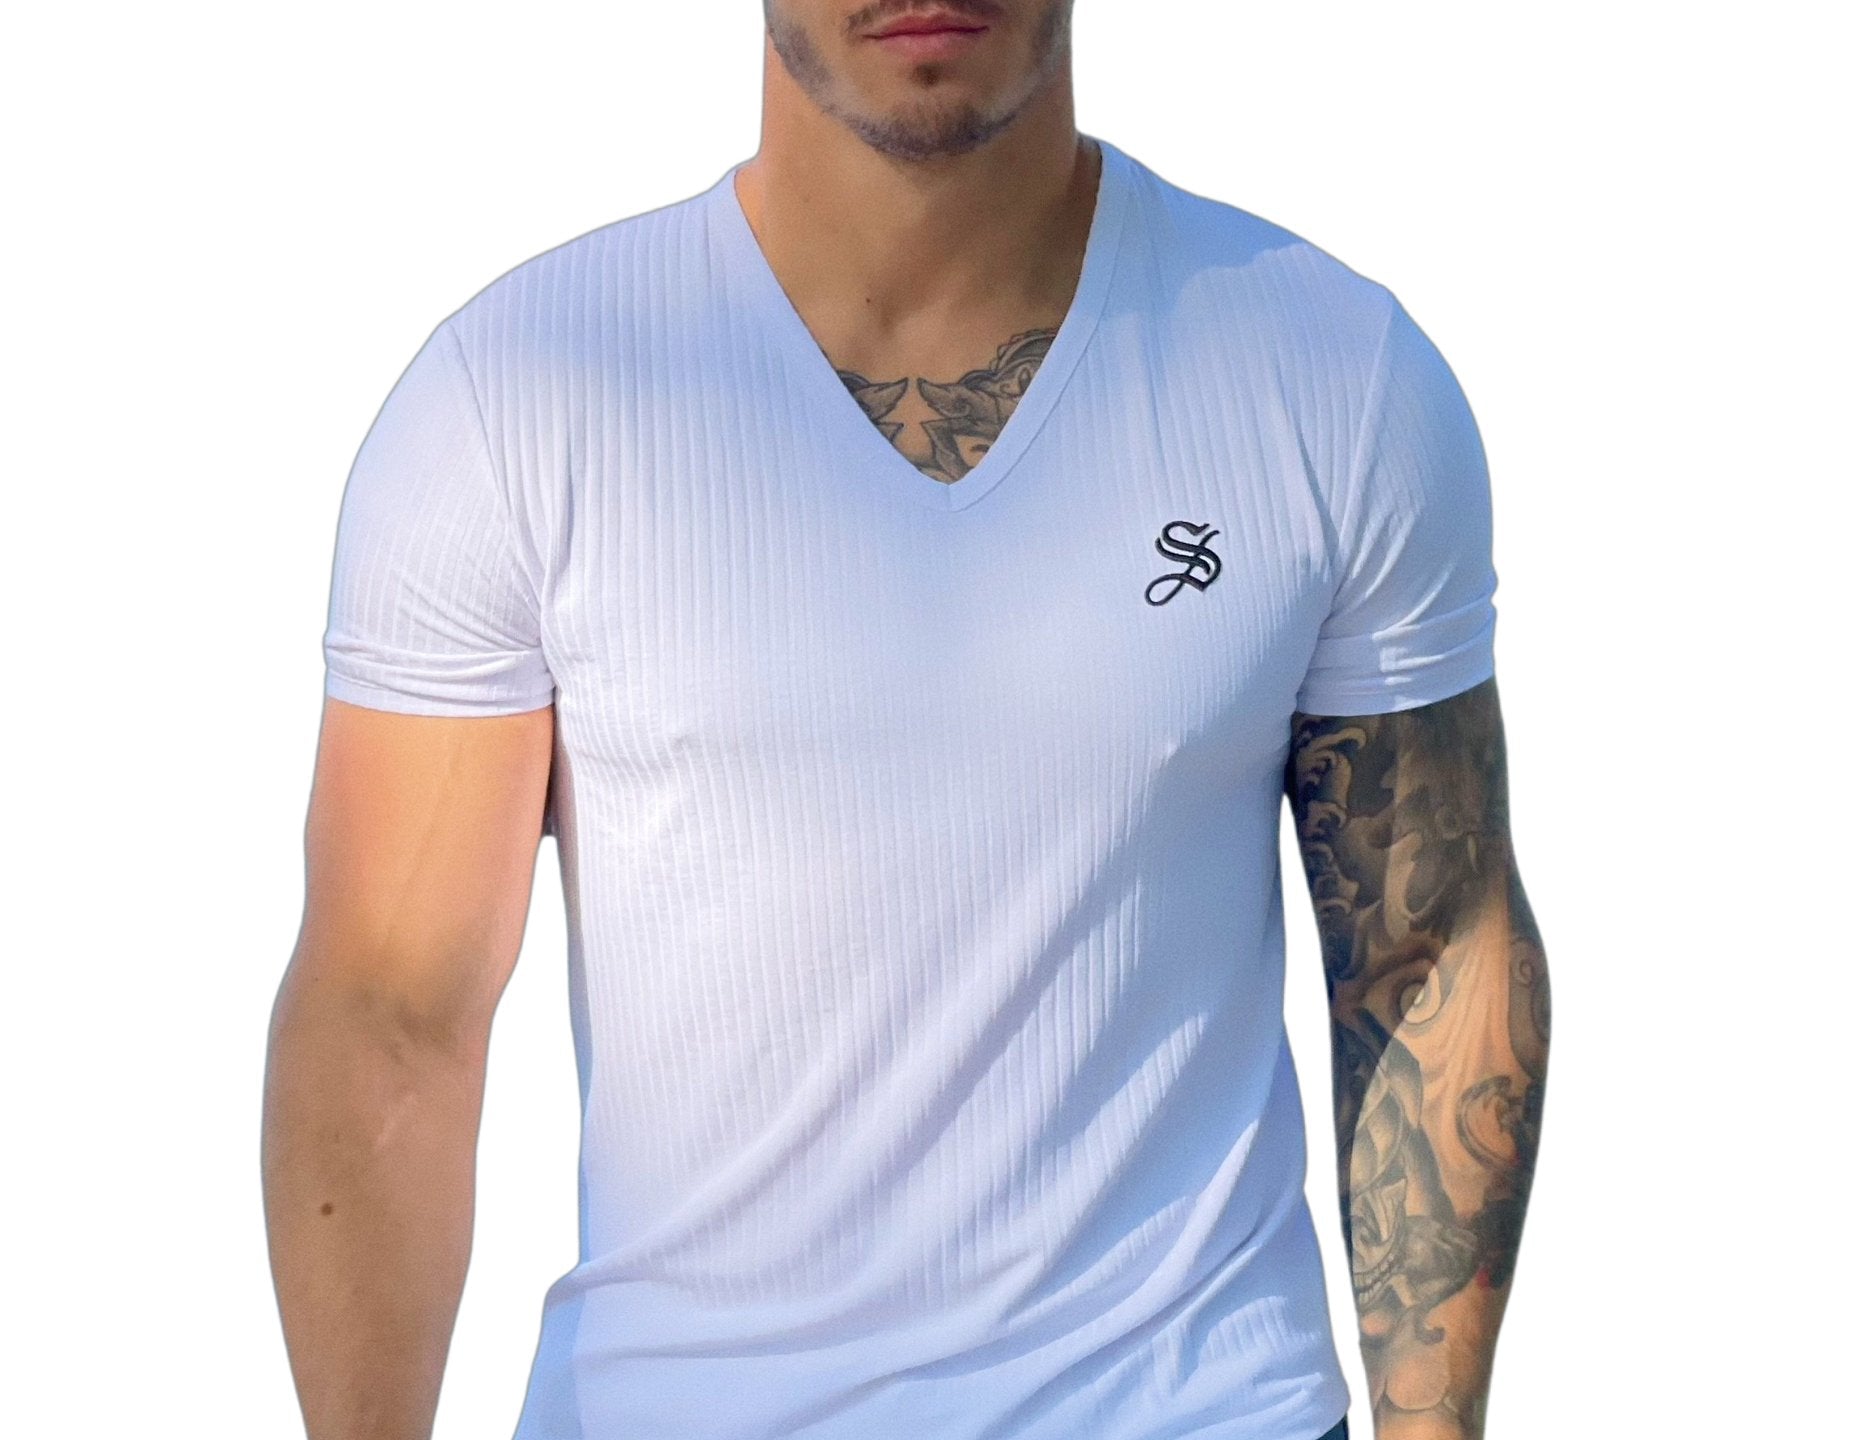 White Tiger - White T-shirt for Men - Sarman Fashion - Wholesale Clothing Fashion Brand for Men from Canada